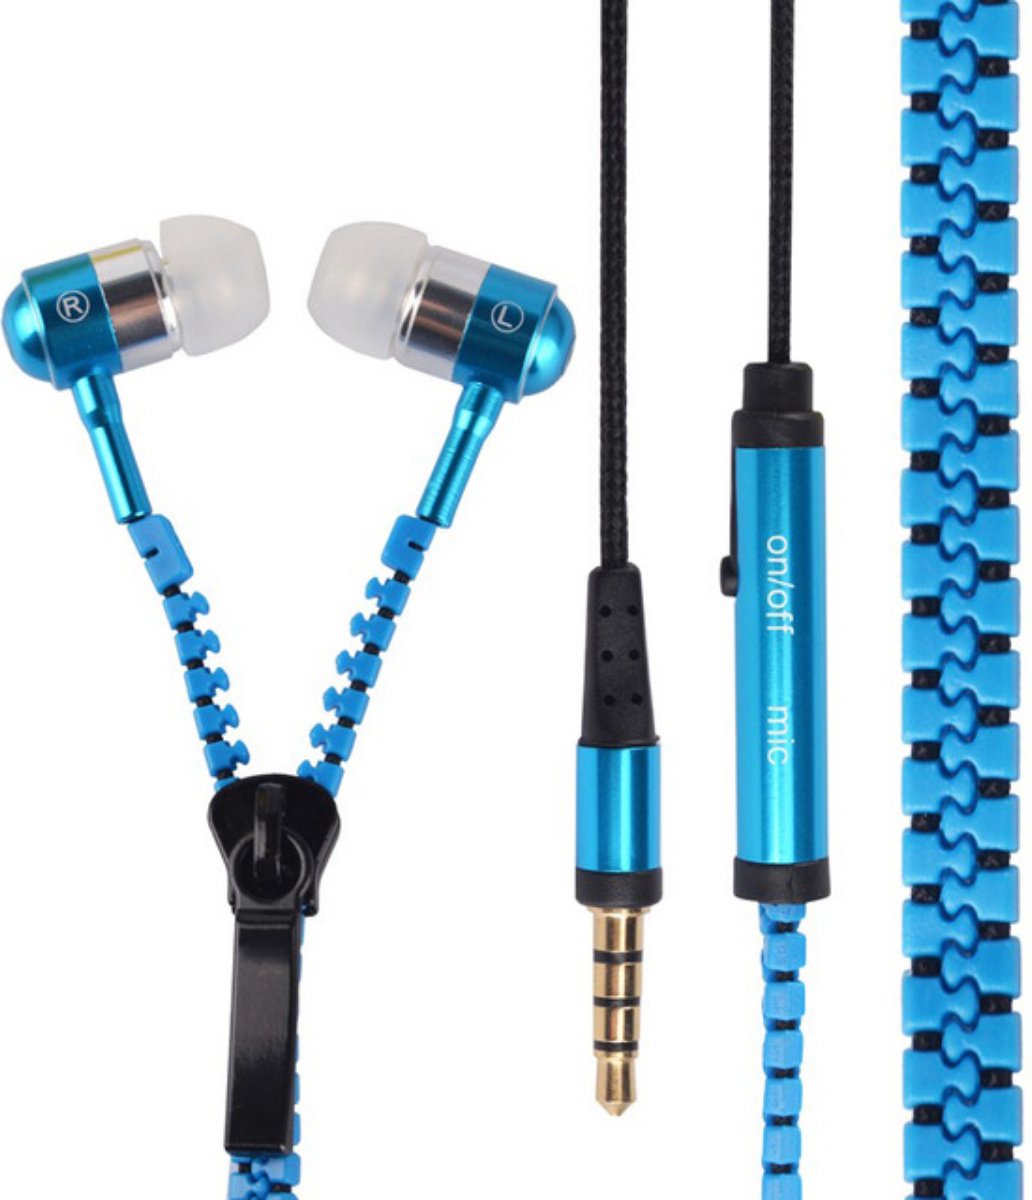 Koptelefoon met ritssluiting - Basmonitor - Metalen in-ear Hoofdtelefoons met microfoon voor MP3, mobiele telefoons en pc - Blauw